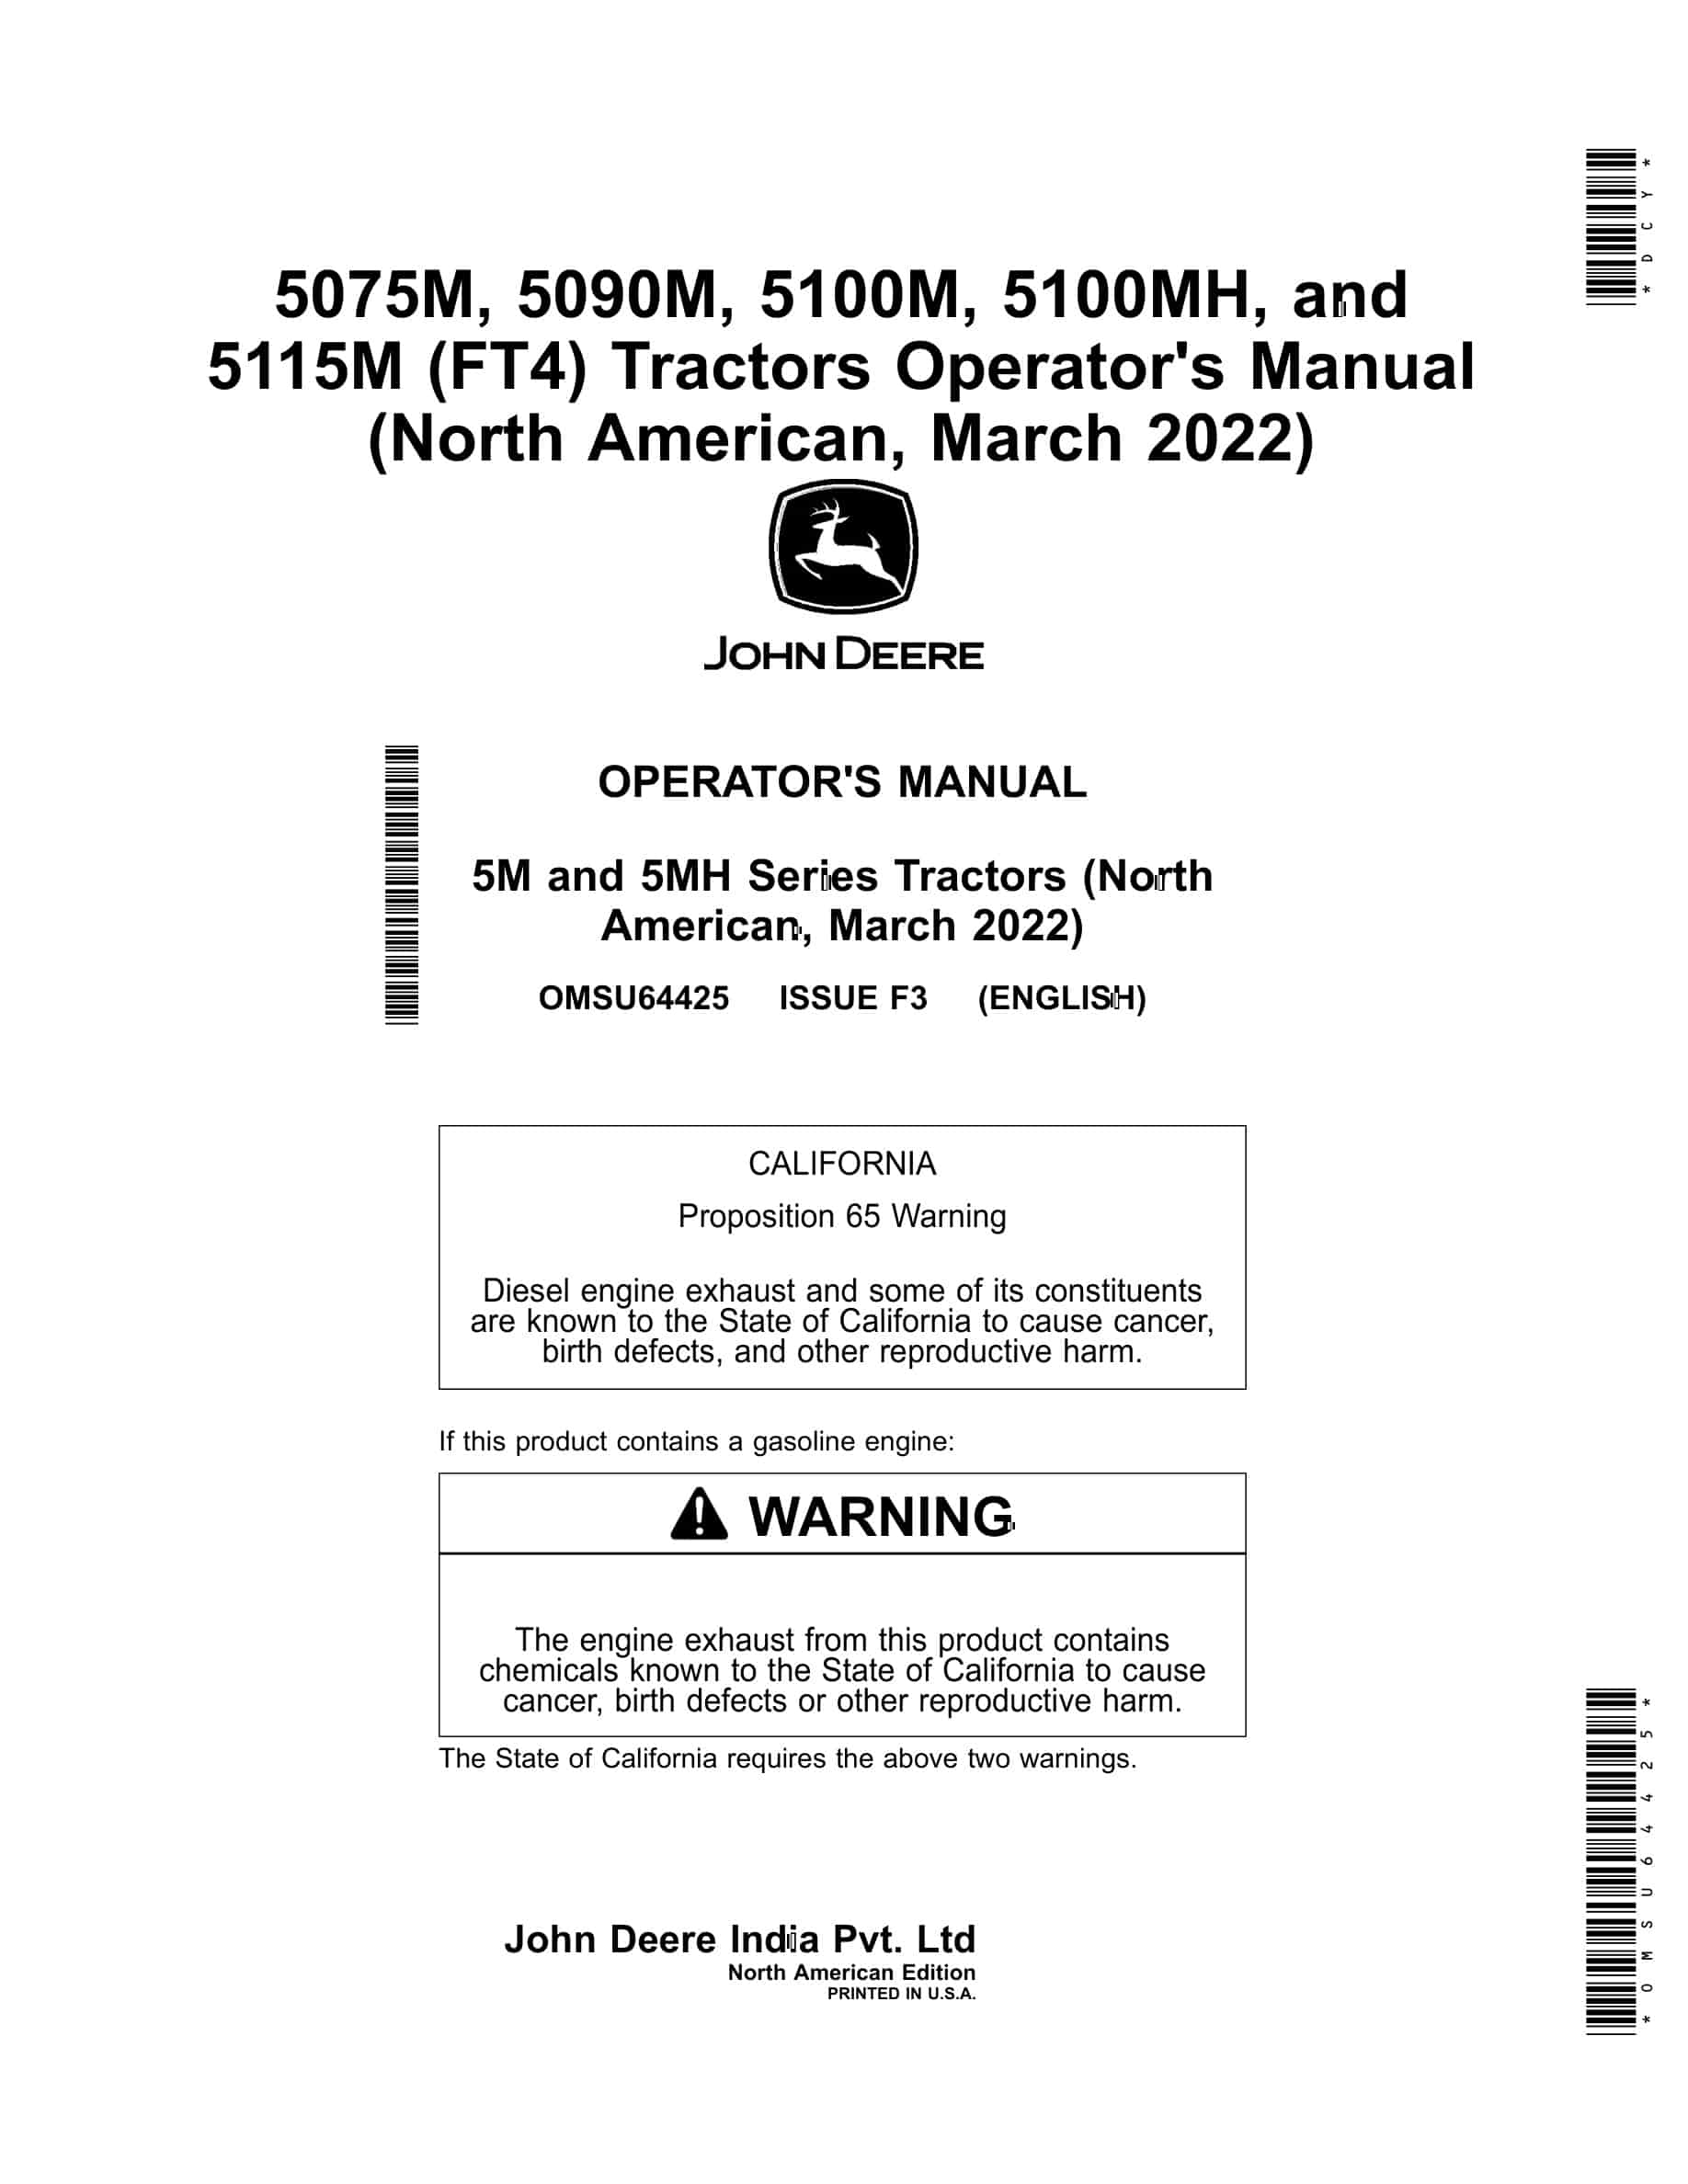 John Deere 5075m, 5090m, 5100m, 5100mh, And 5115m (ft4) Tractors Operator Manuals OMSU64425-1